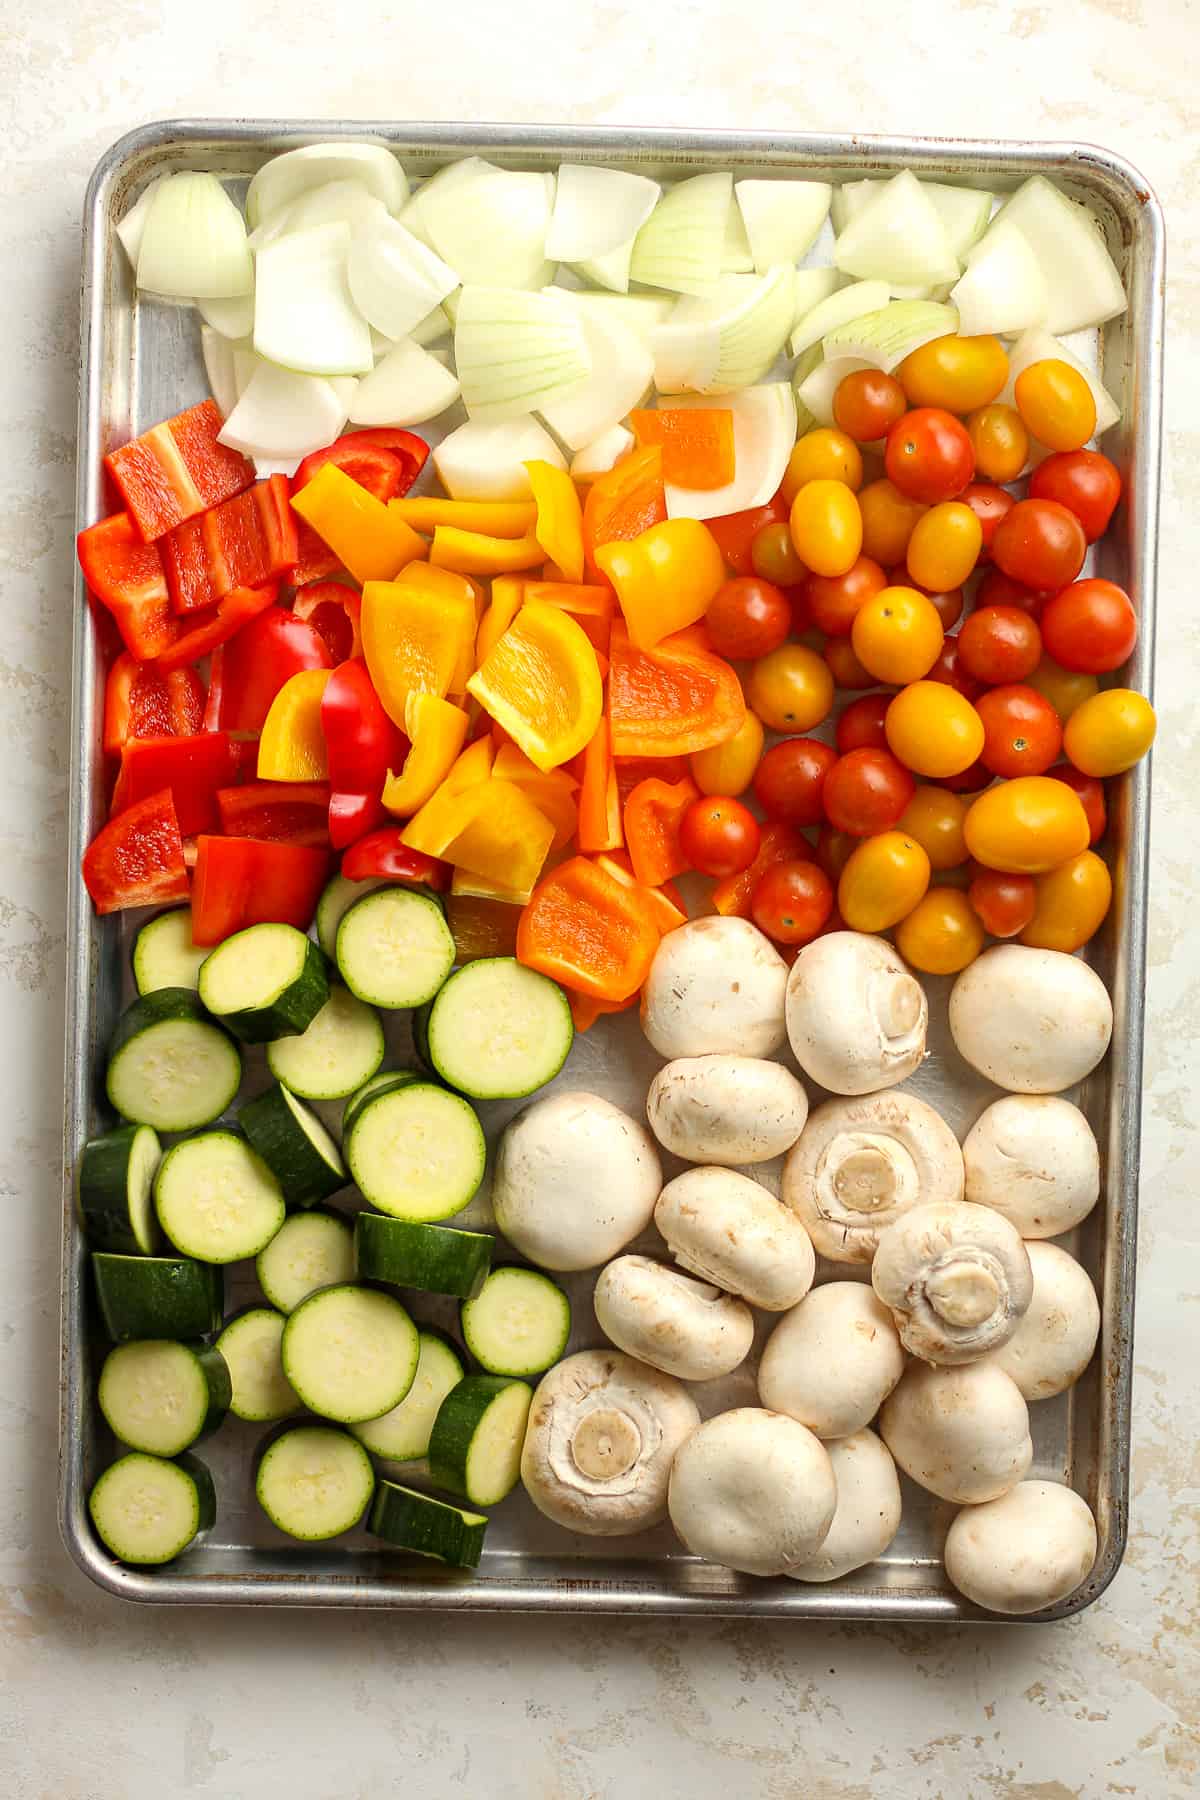 A sheet pan of veggies - onions, peppers, cherry tomatoes, zucchini, mushrooms.